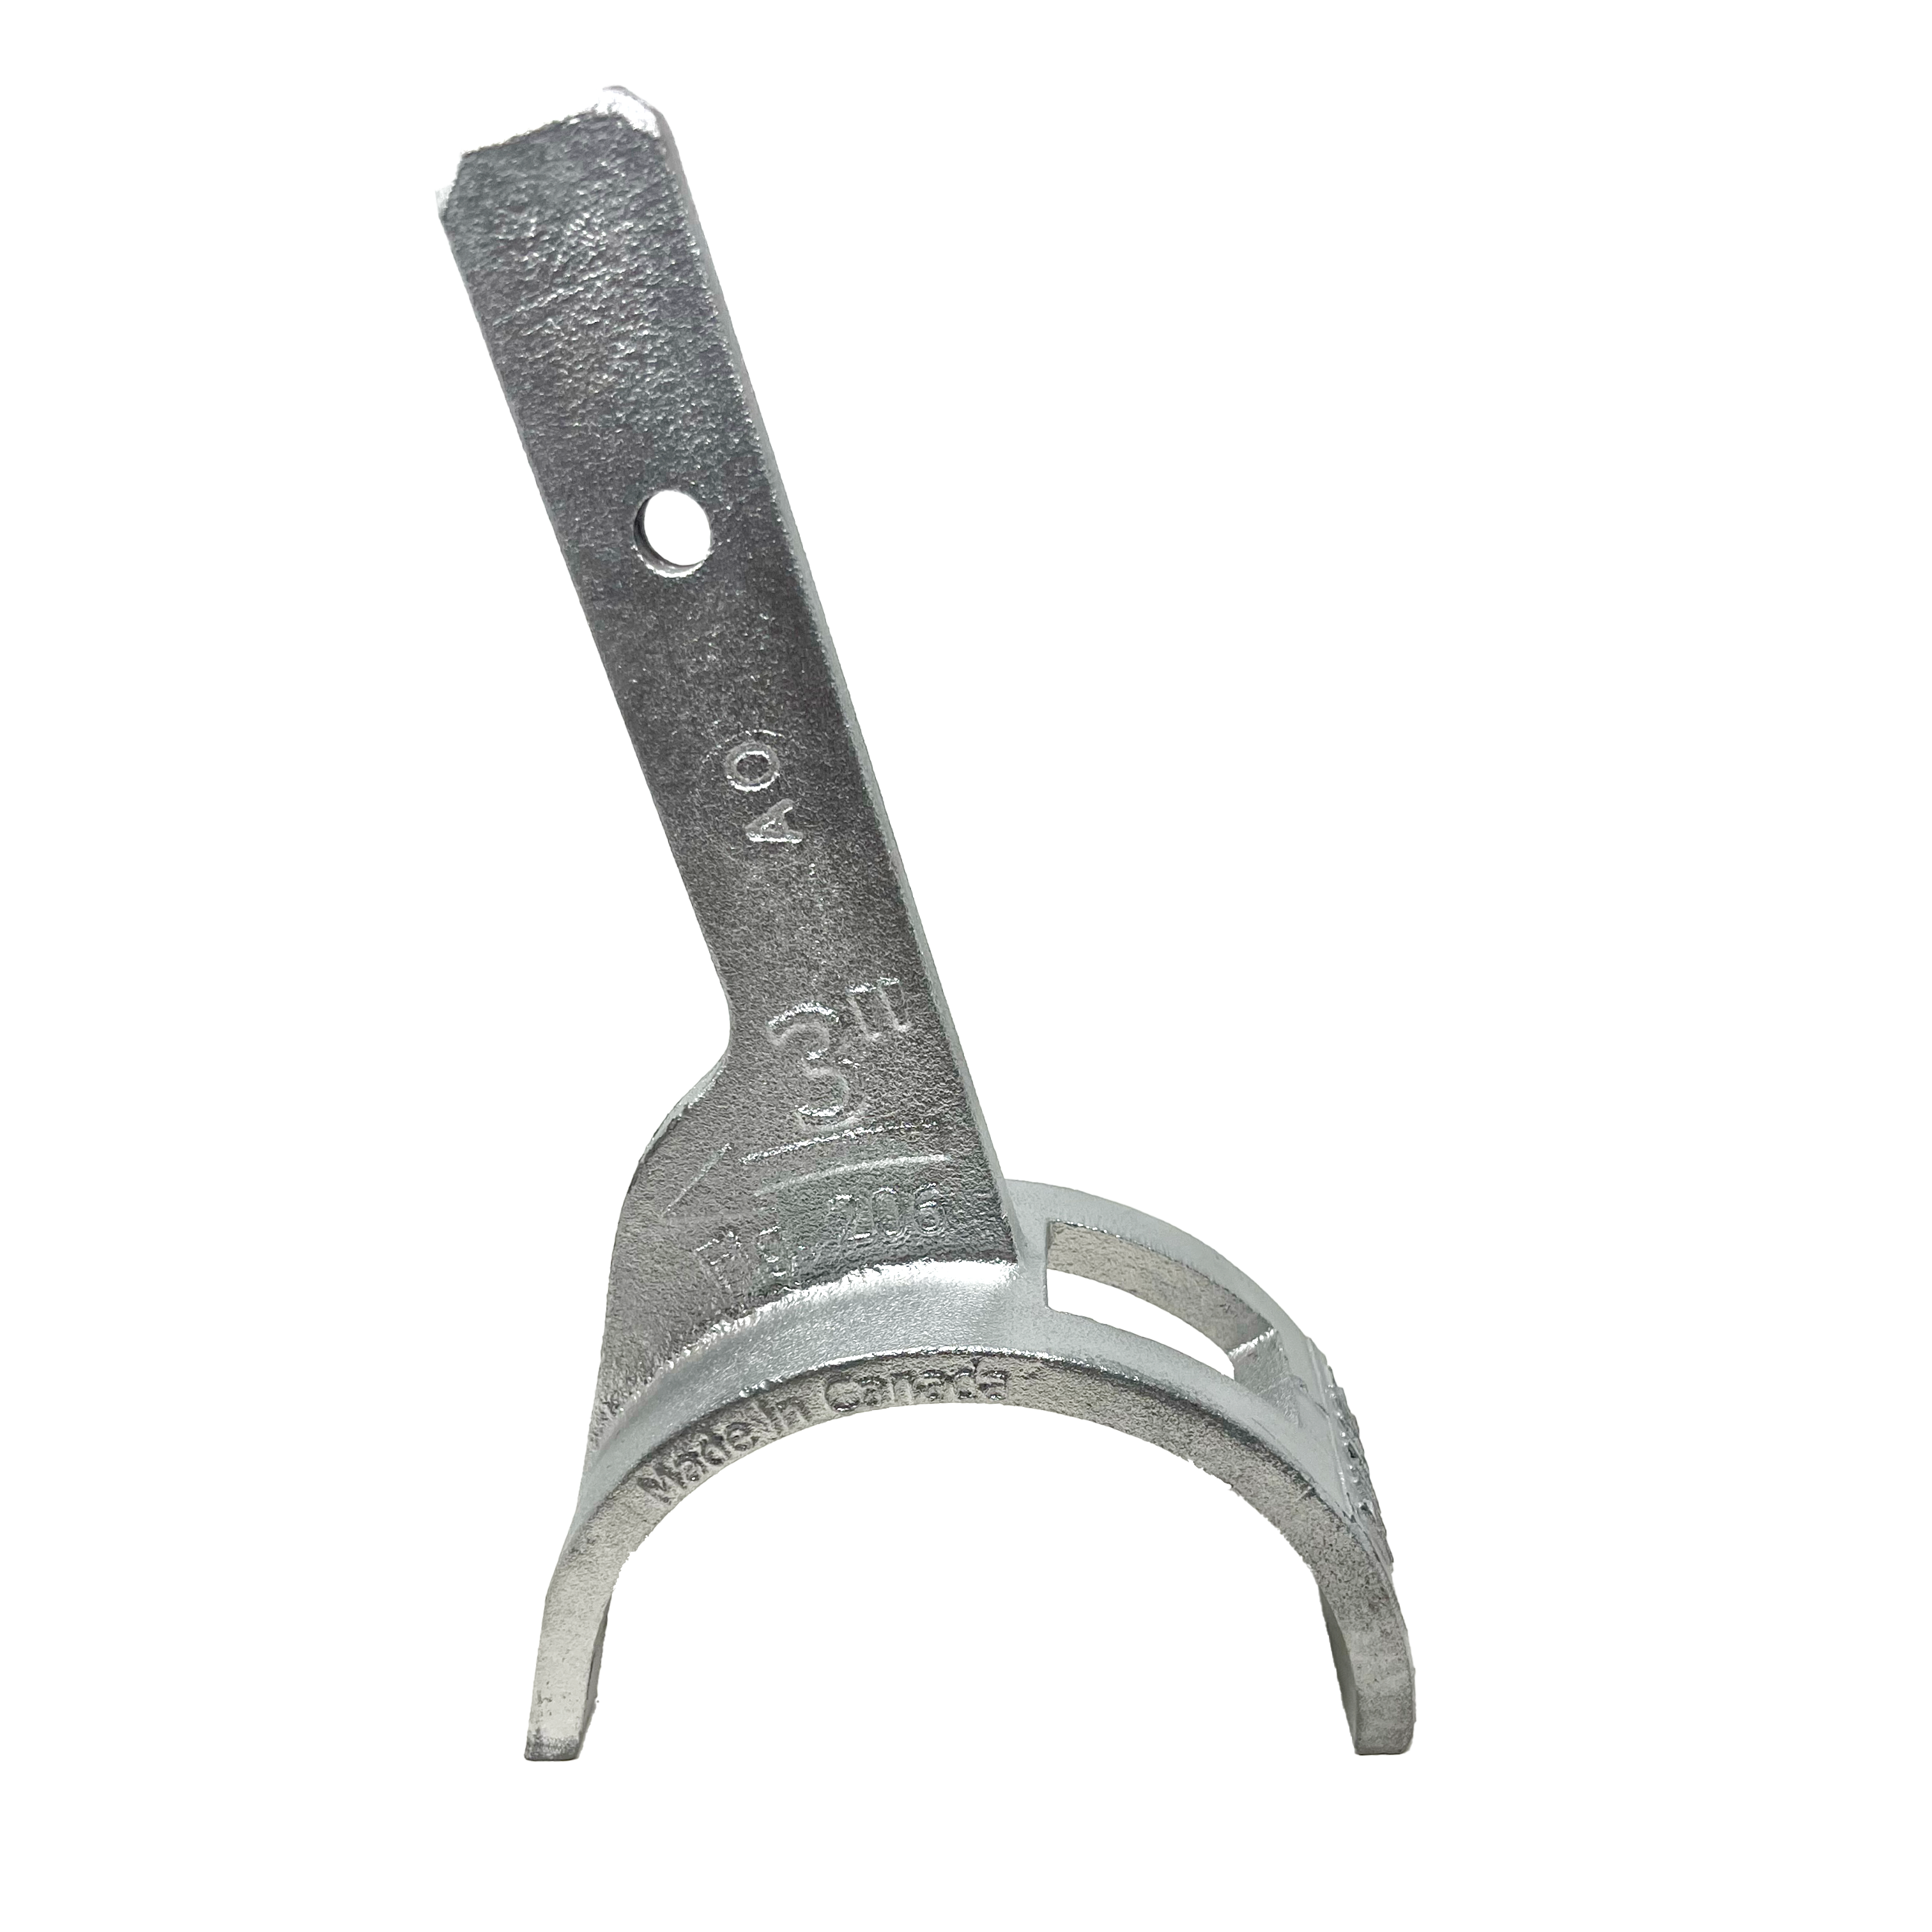 710-0022 HUWE Wrench Head for 3" Figure 100, Figure 200, Figure 206, Figure 300